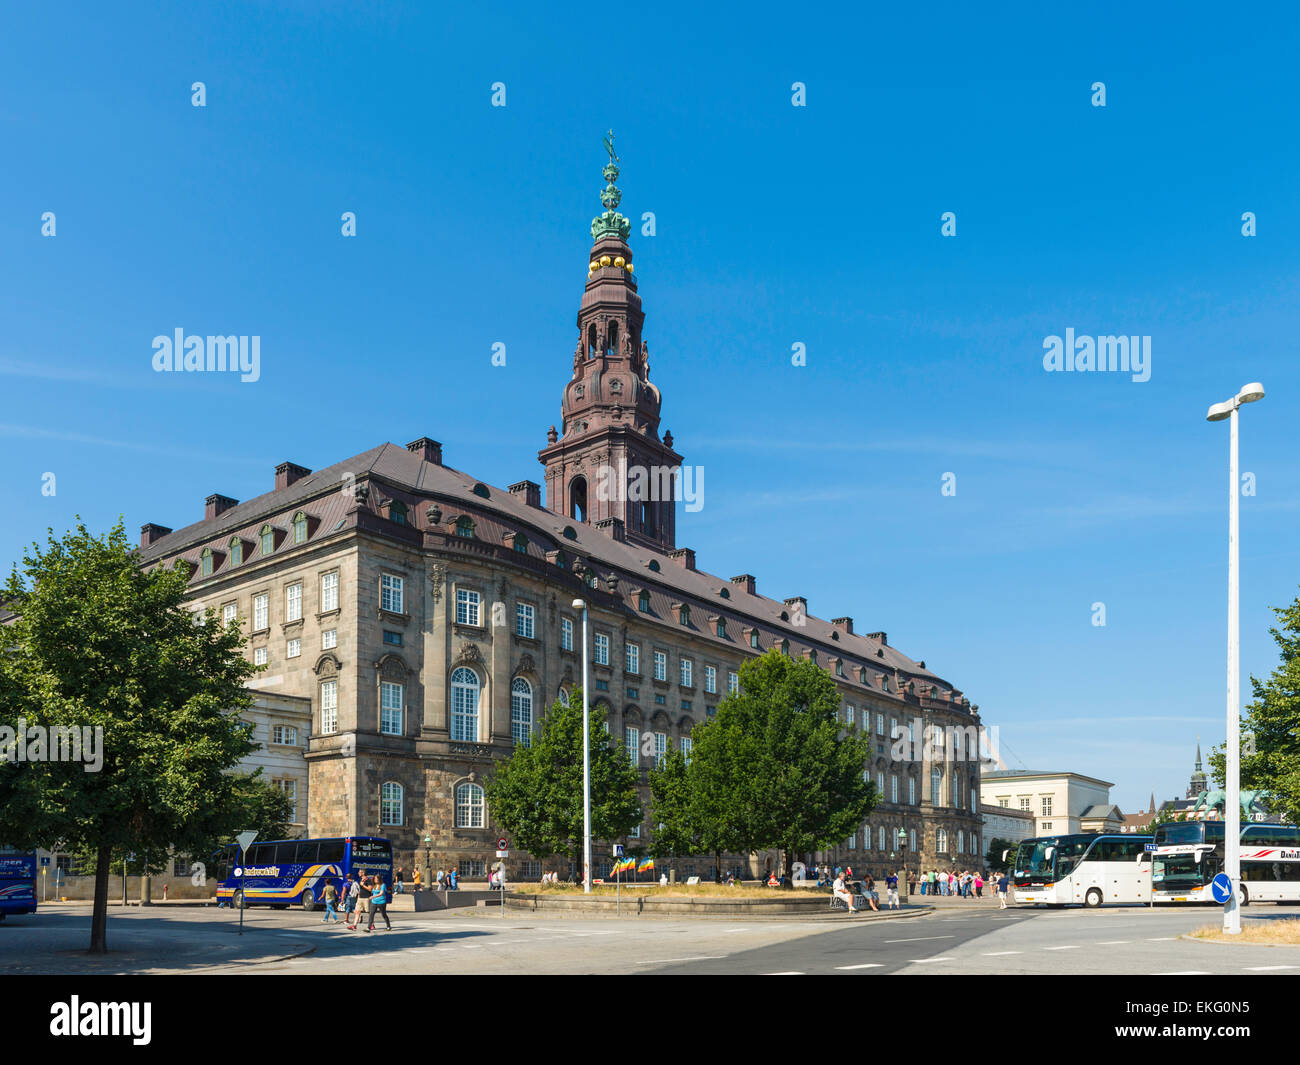 Christiansborg Palace ('Christiansborg Slot') en Slotsholmen en Copenhague, Dinamarca, es la sede del parlamento danés. Foto de stock